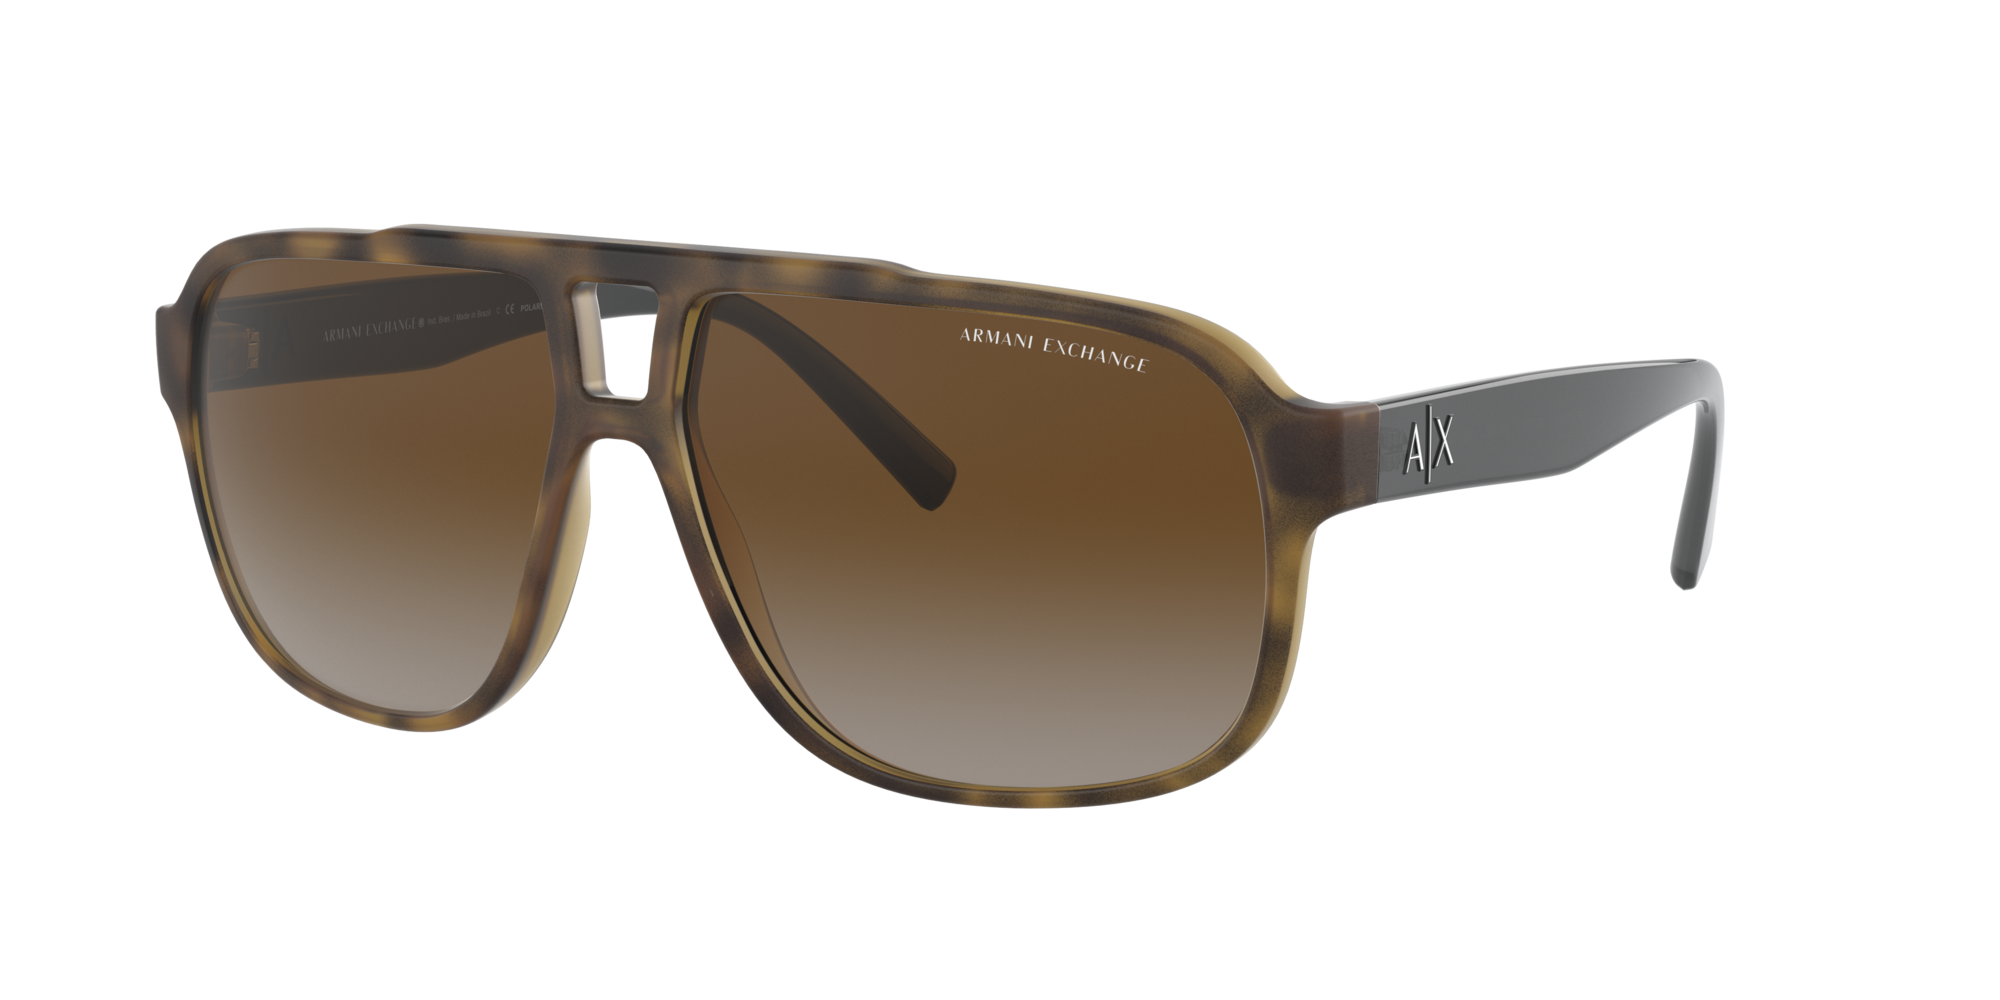 Angle_Left01 Armani Exchange AX 4104S Sunglasses Brown / Havana